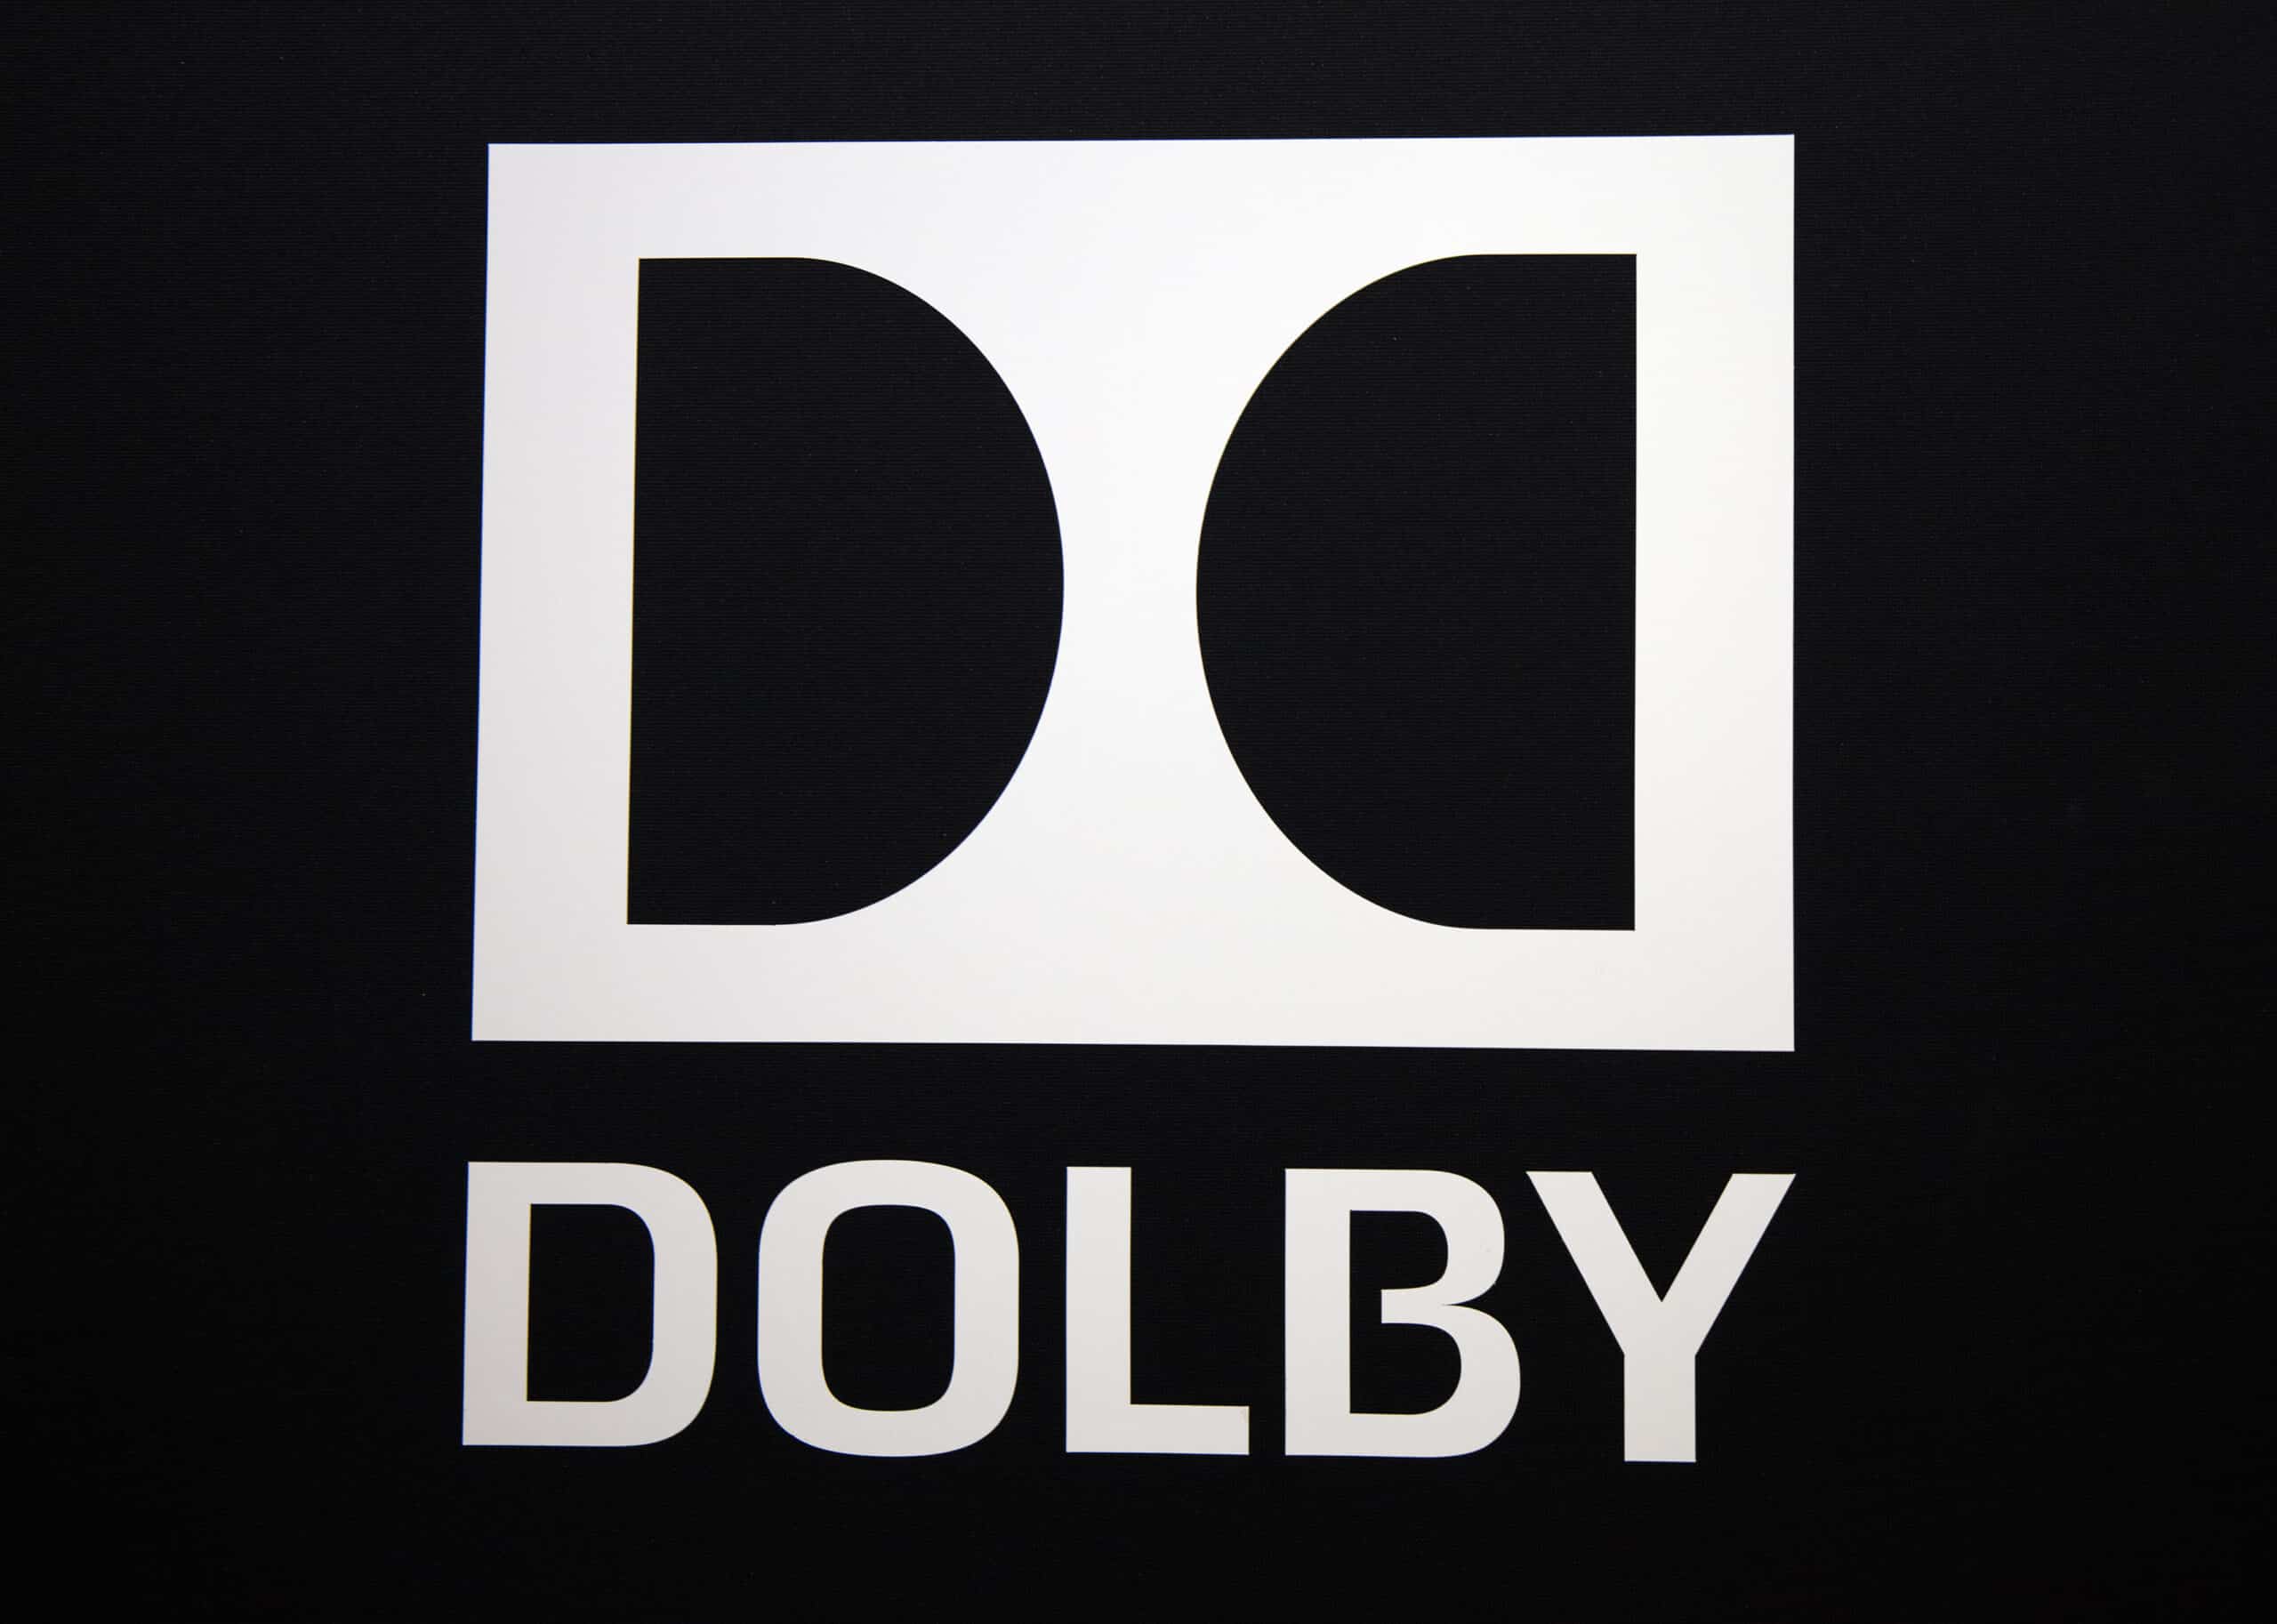 dolby digital logo 2018